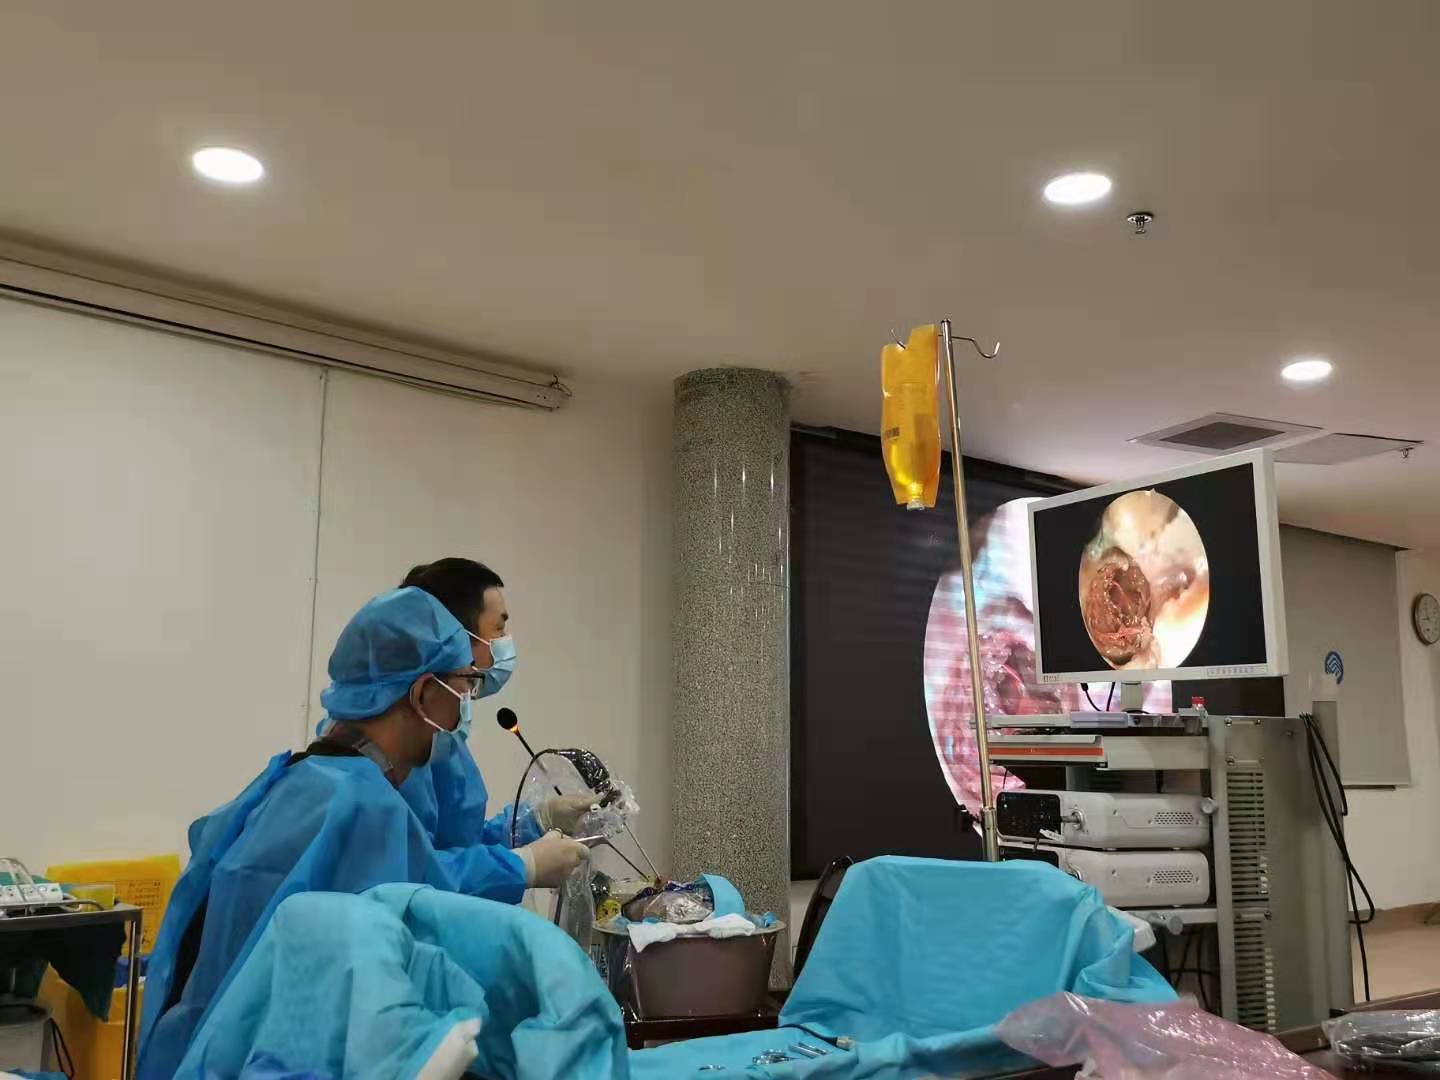 Dajing Endoskop kamera sistemi ile nazokraniyal taban anatomisi